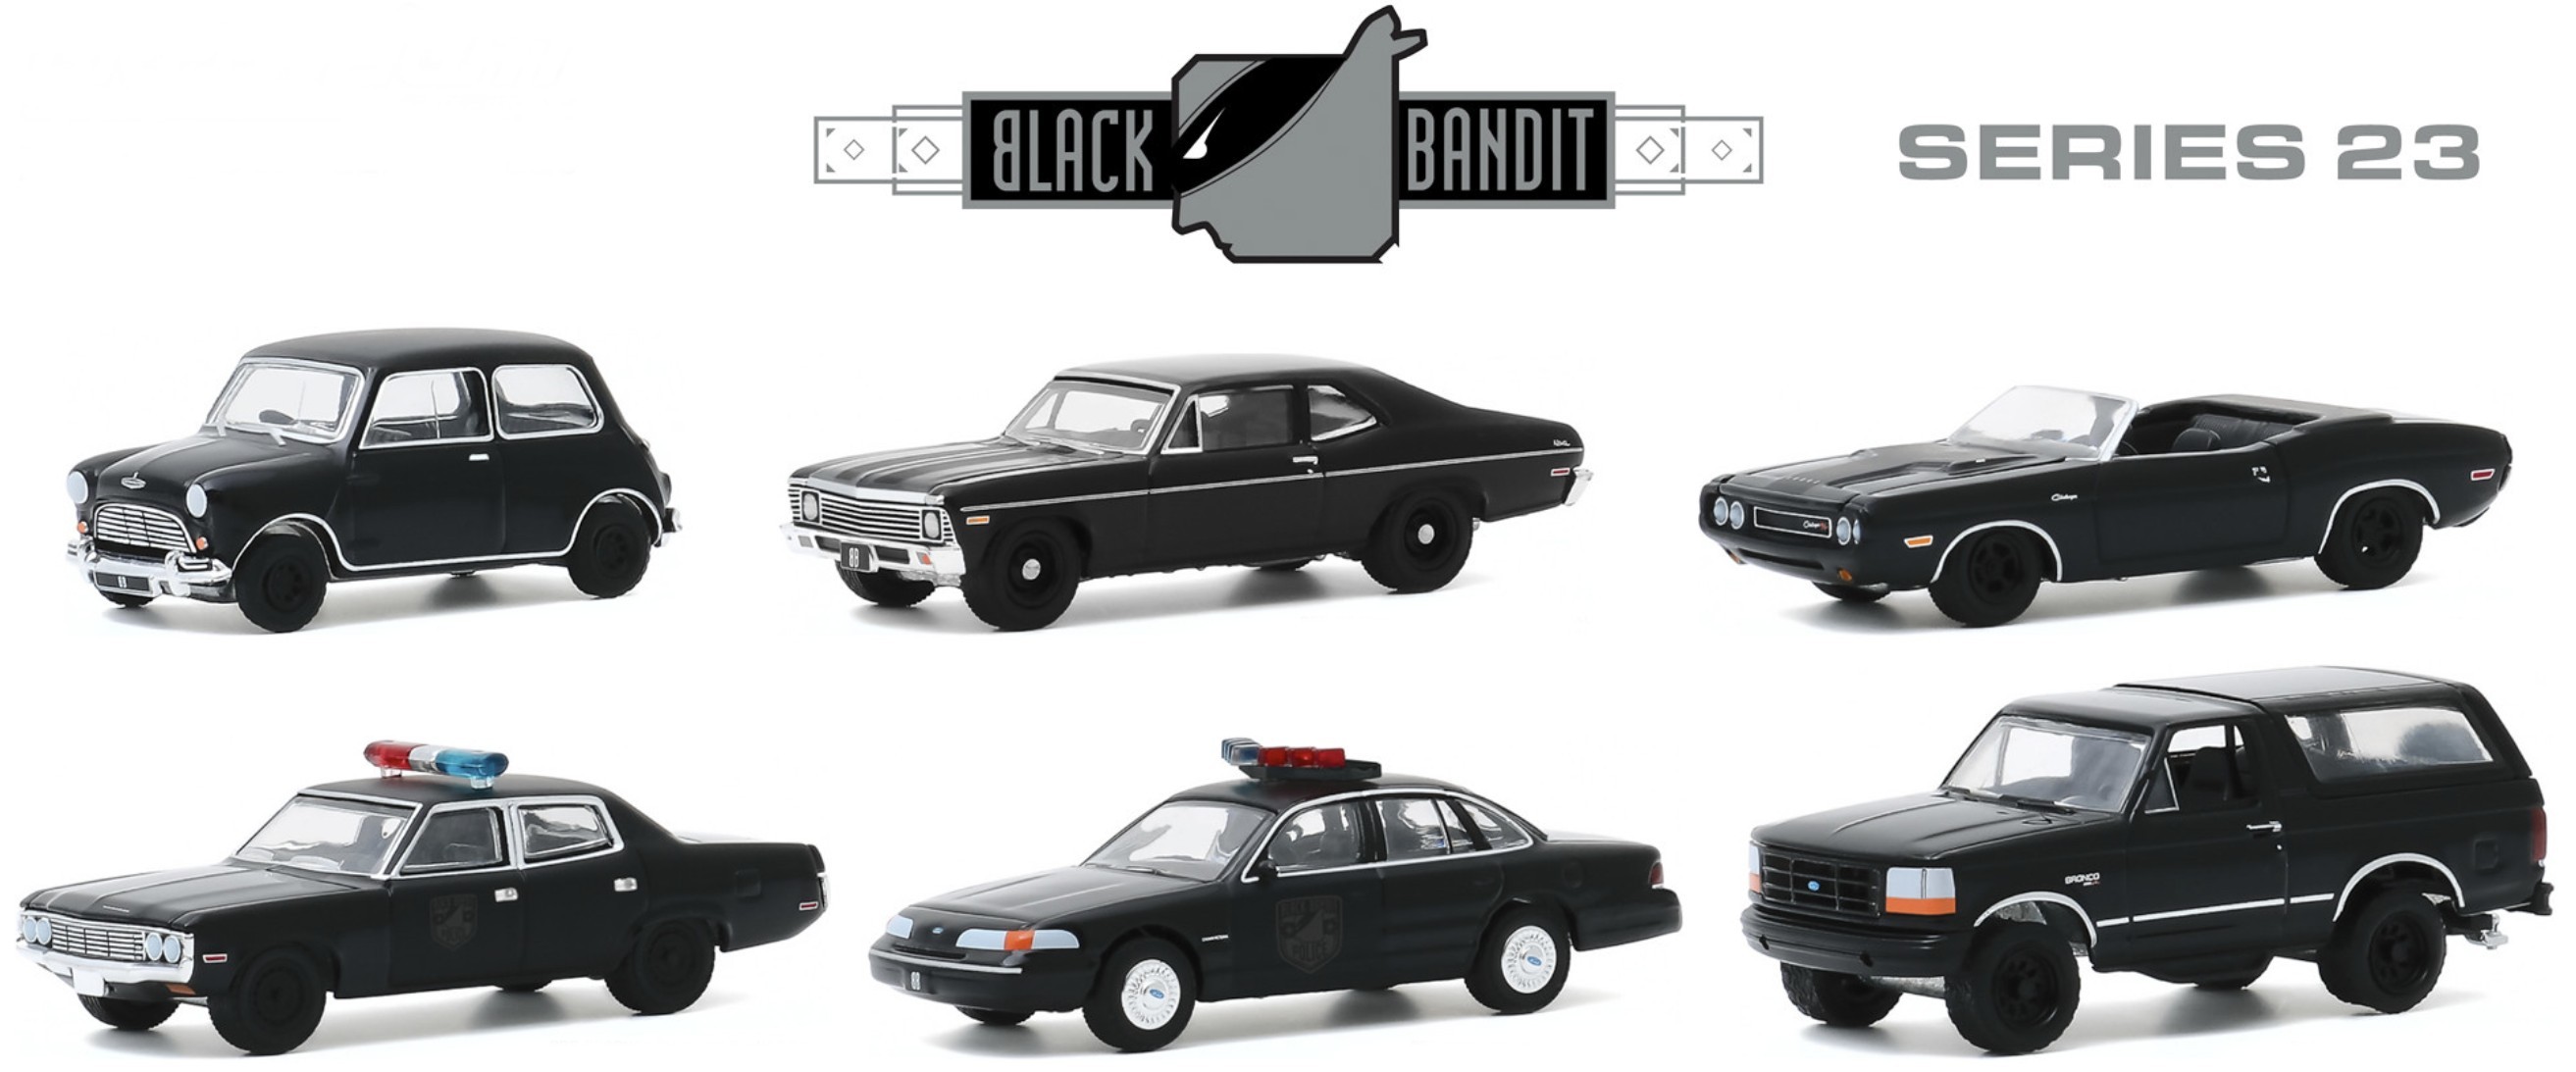 BLACK BANDIT SERIES 23 - 6 CAR SET